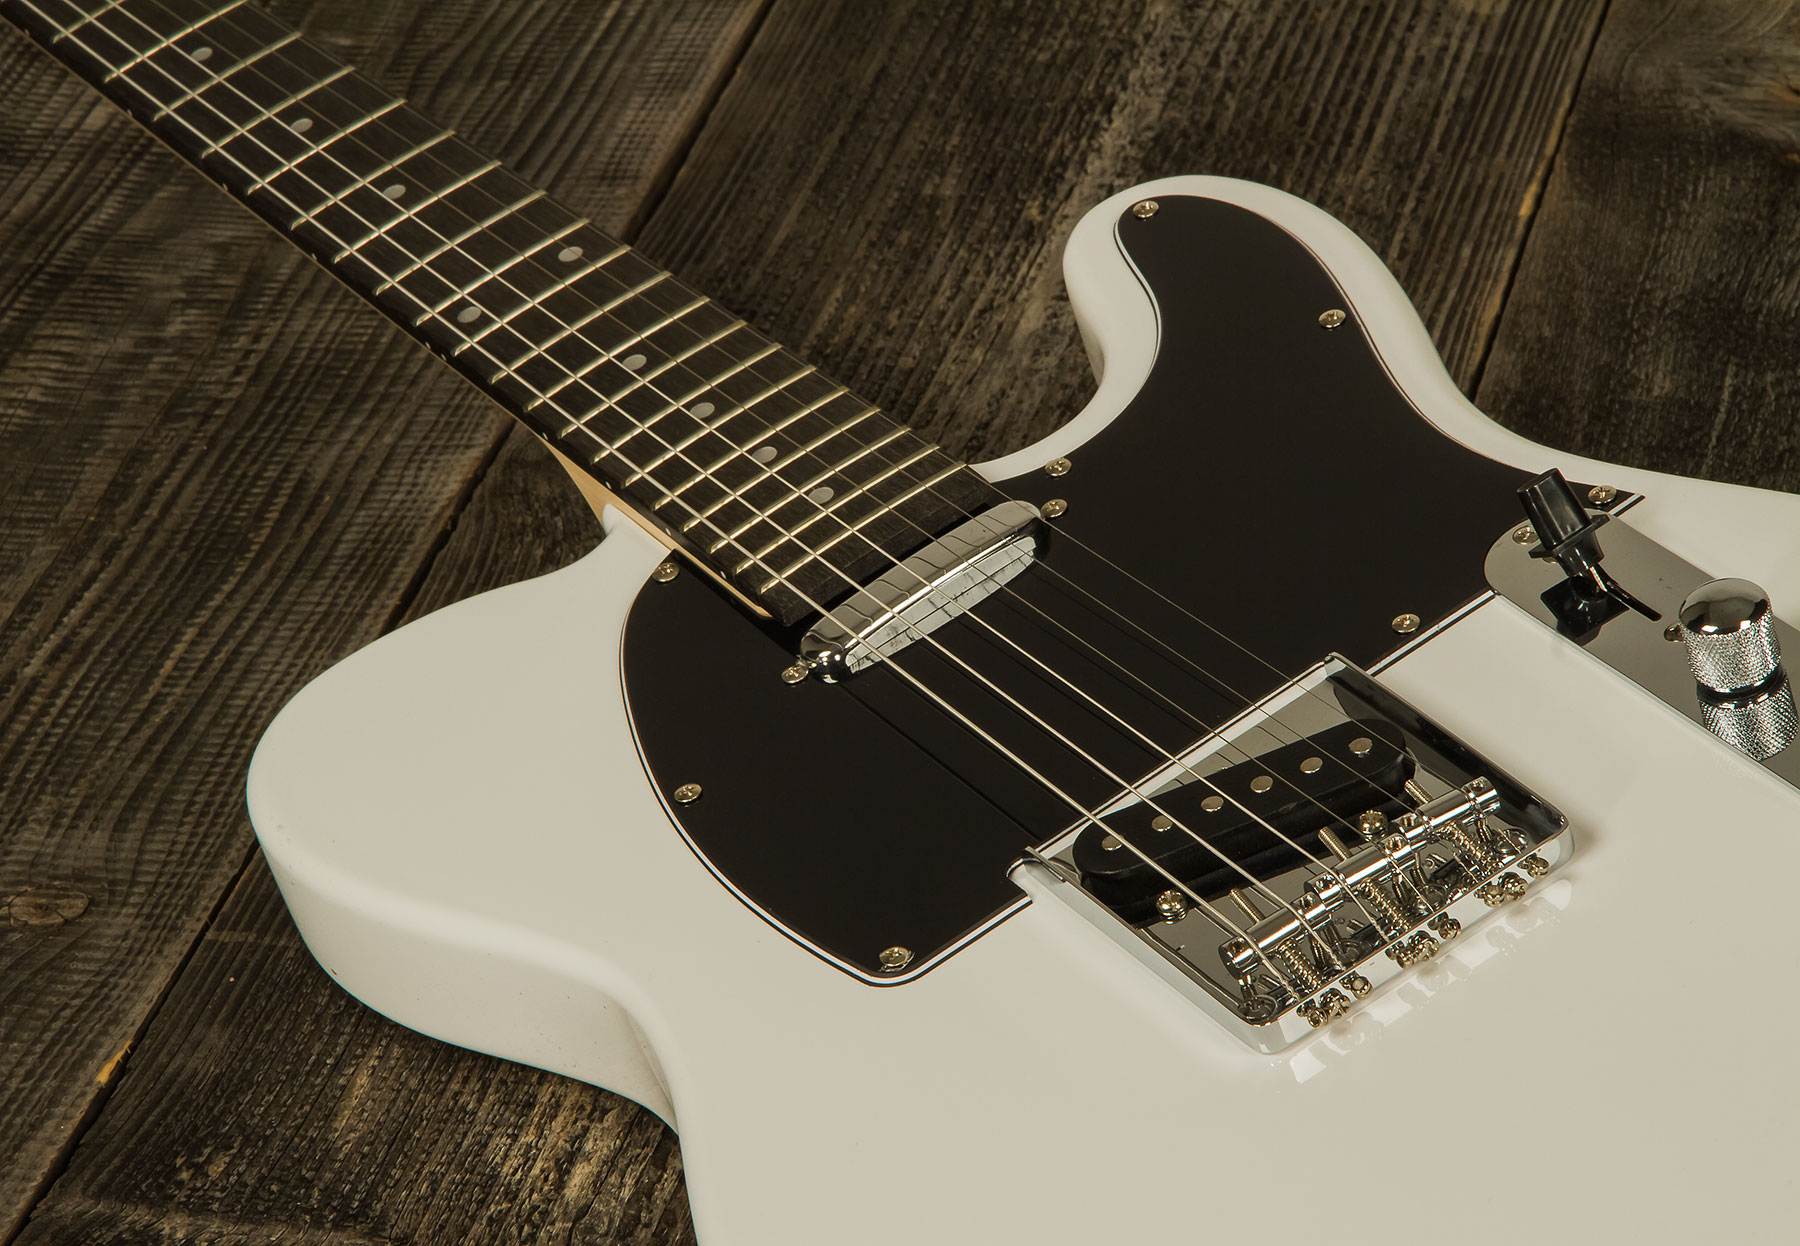 Eastone Tl70 2s Ht Pur - Olympic White - Guitarra eléctrica con forma de tel - Variation 3